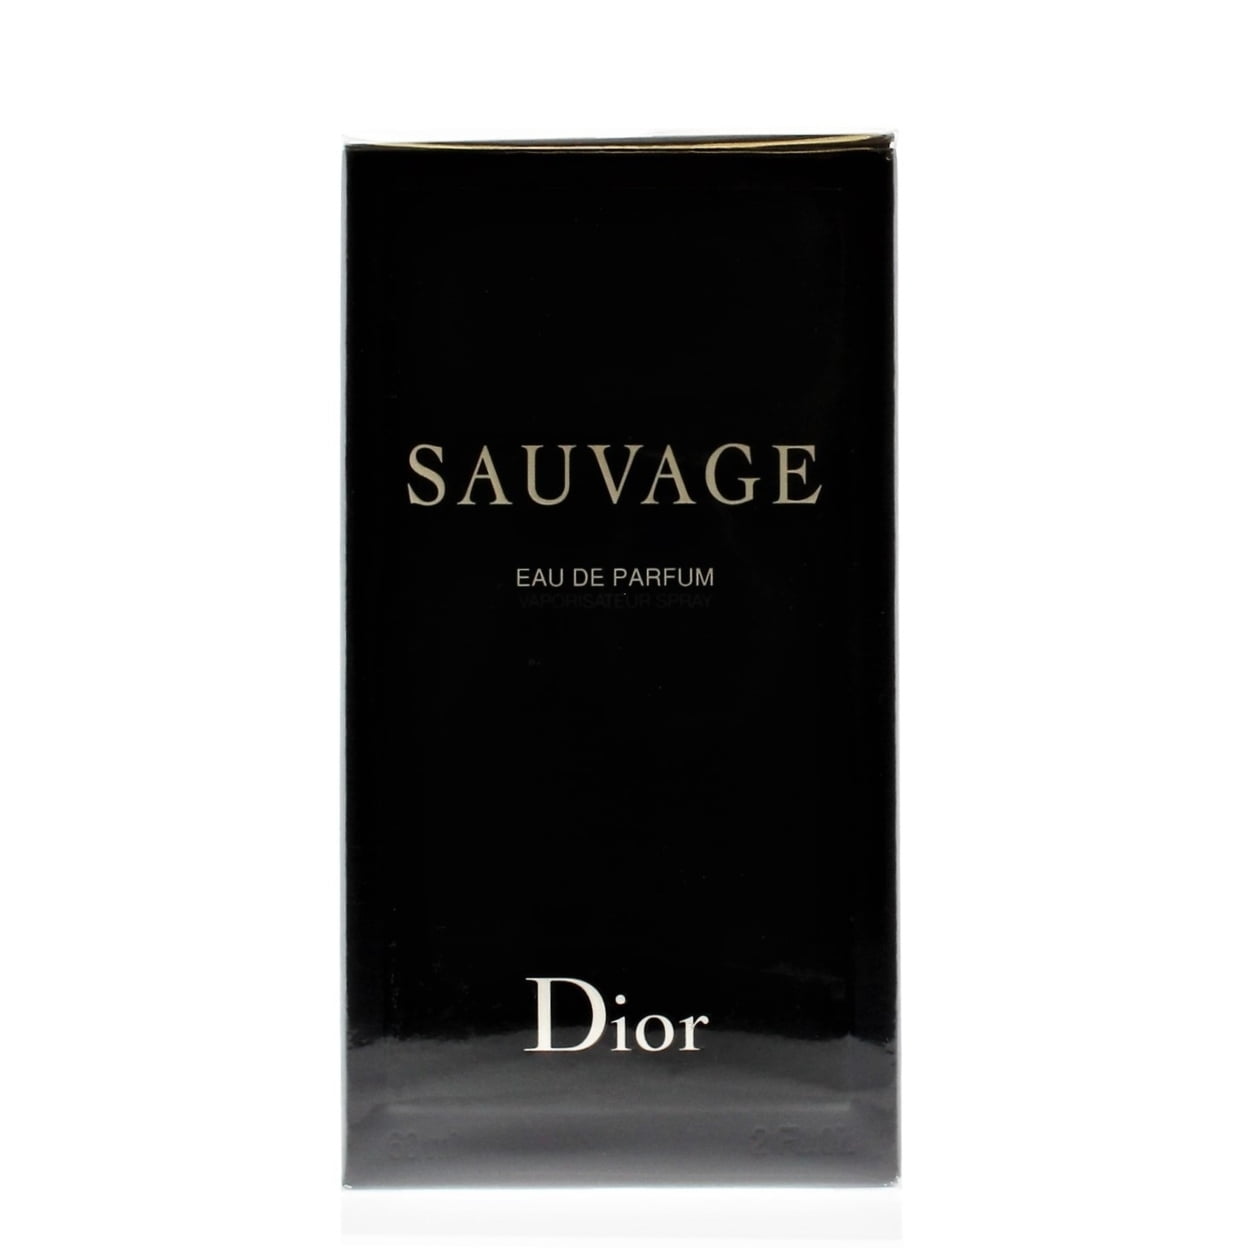 Dior Sauvage Eau de Parfum, Cologne For Men, 2 oz - Walmart.com